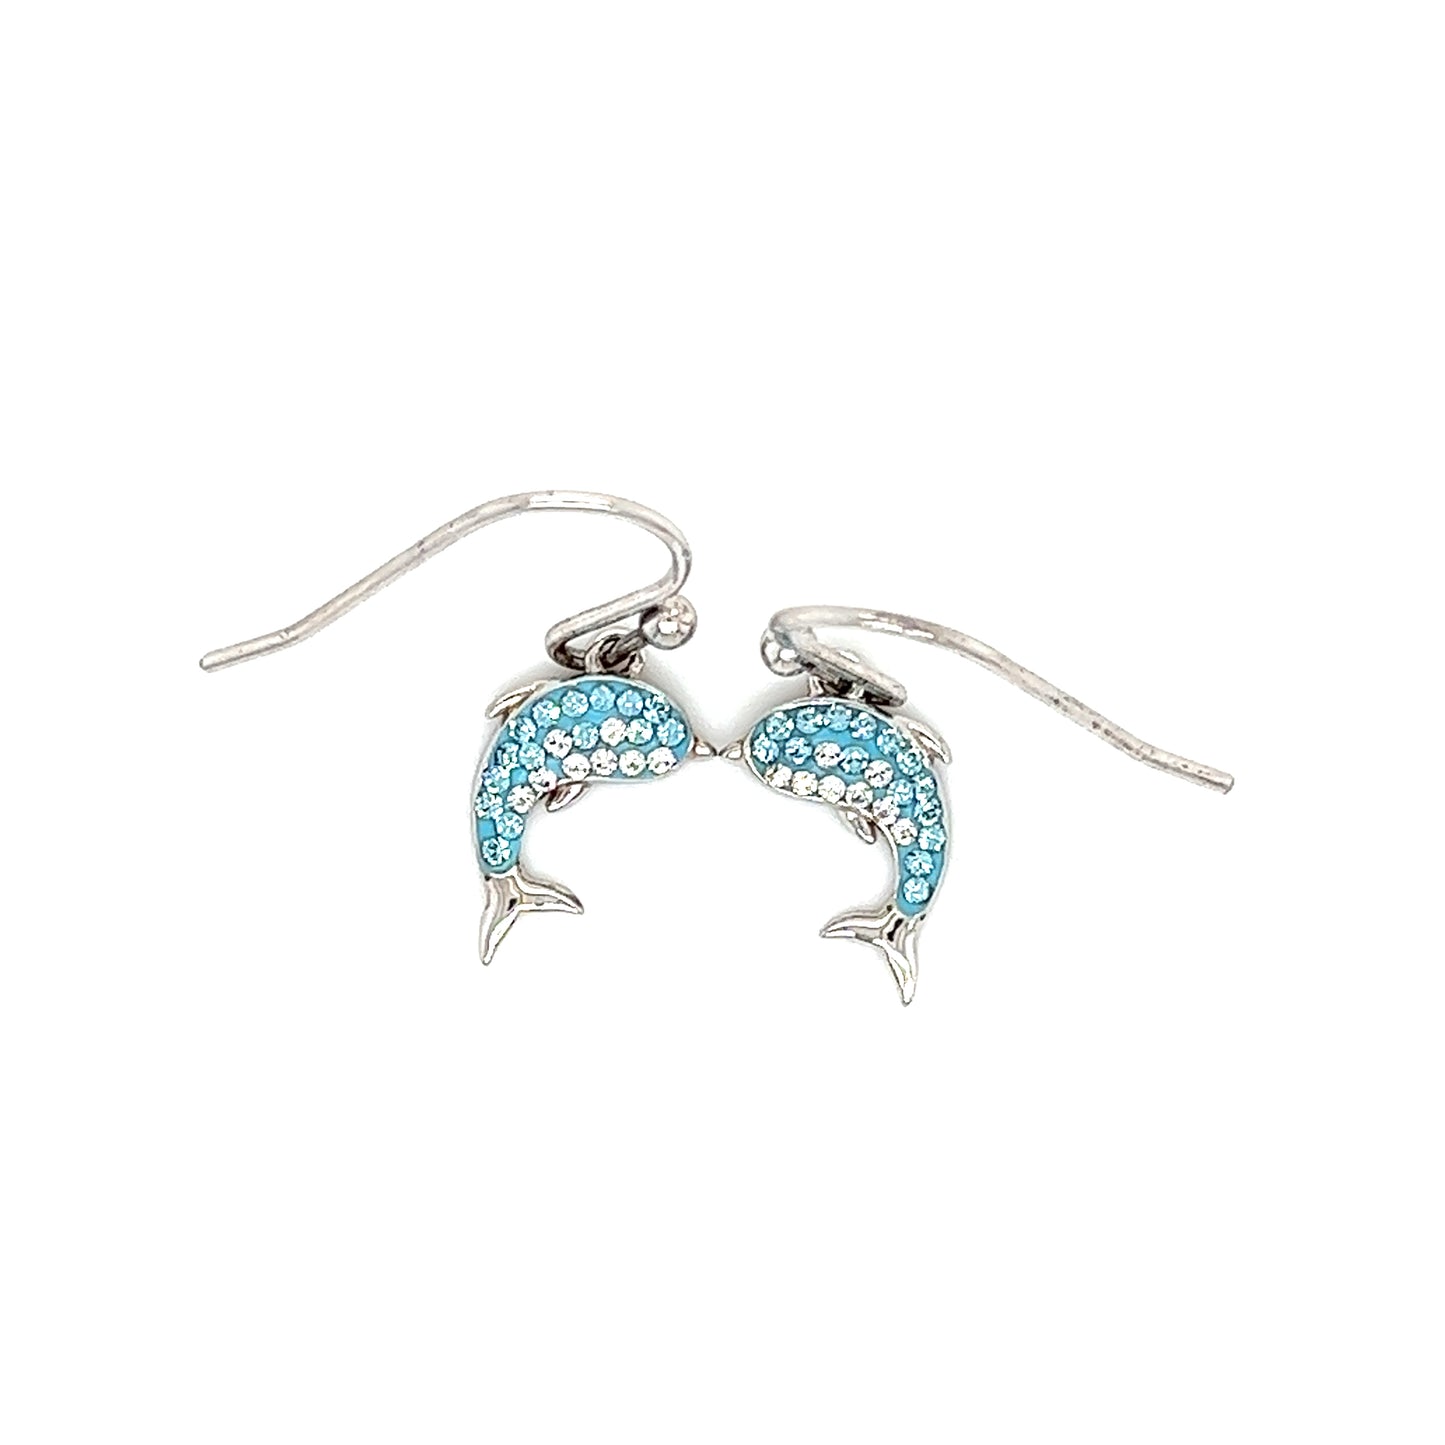 Dolphin Dangle Earrings in Sterling Silver Top View